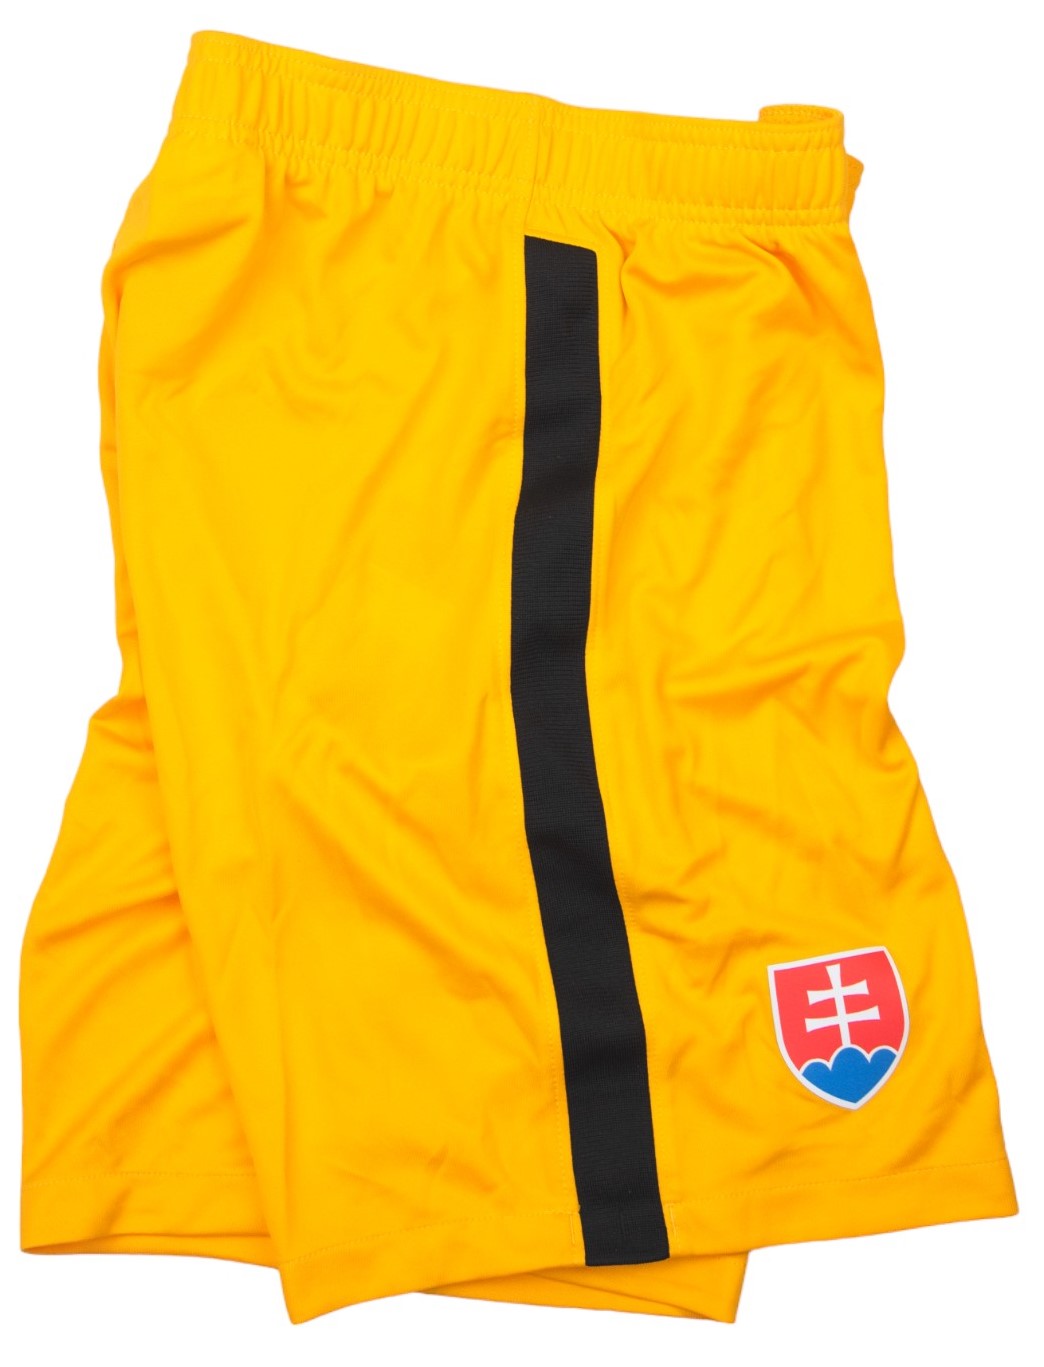 Pánské fotbalové šortky Nike Dri-FIT Slovensko, brankářské